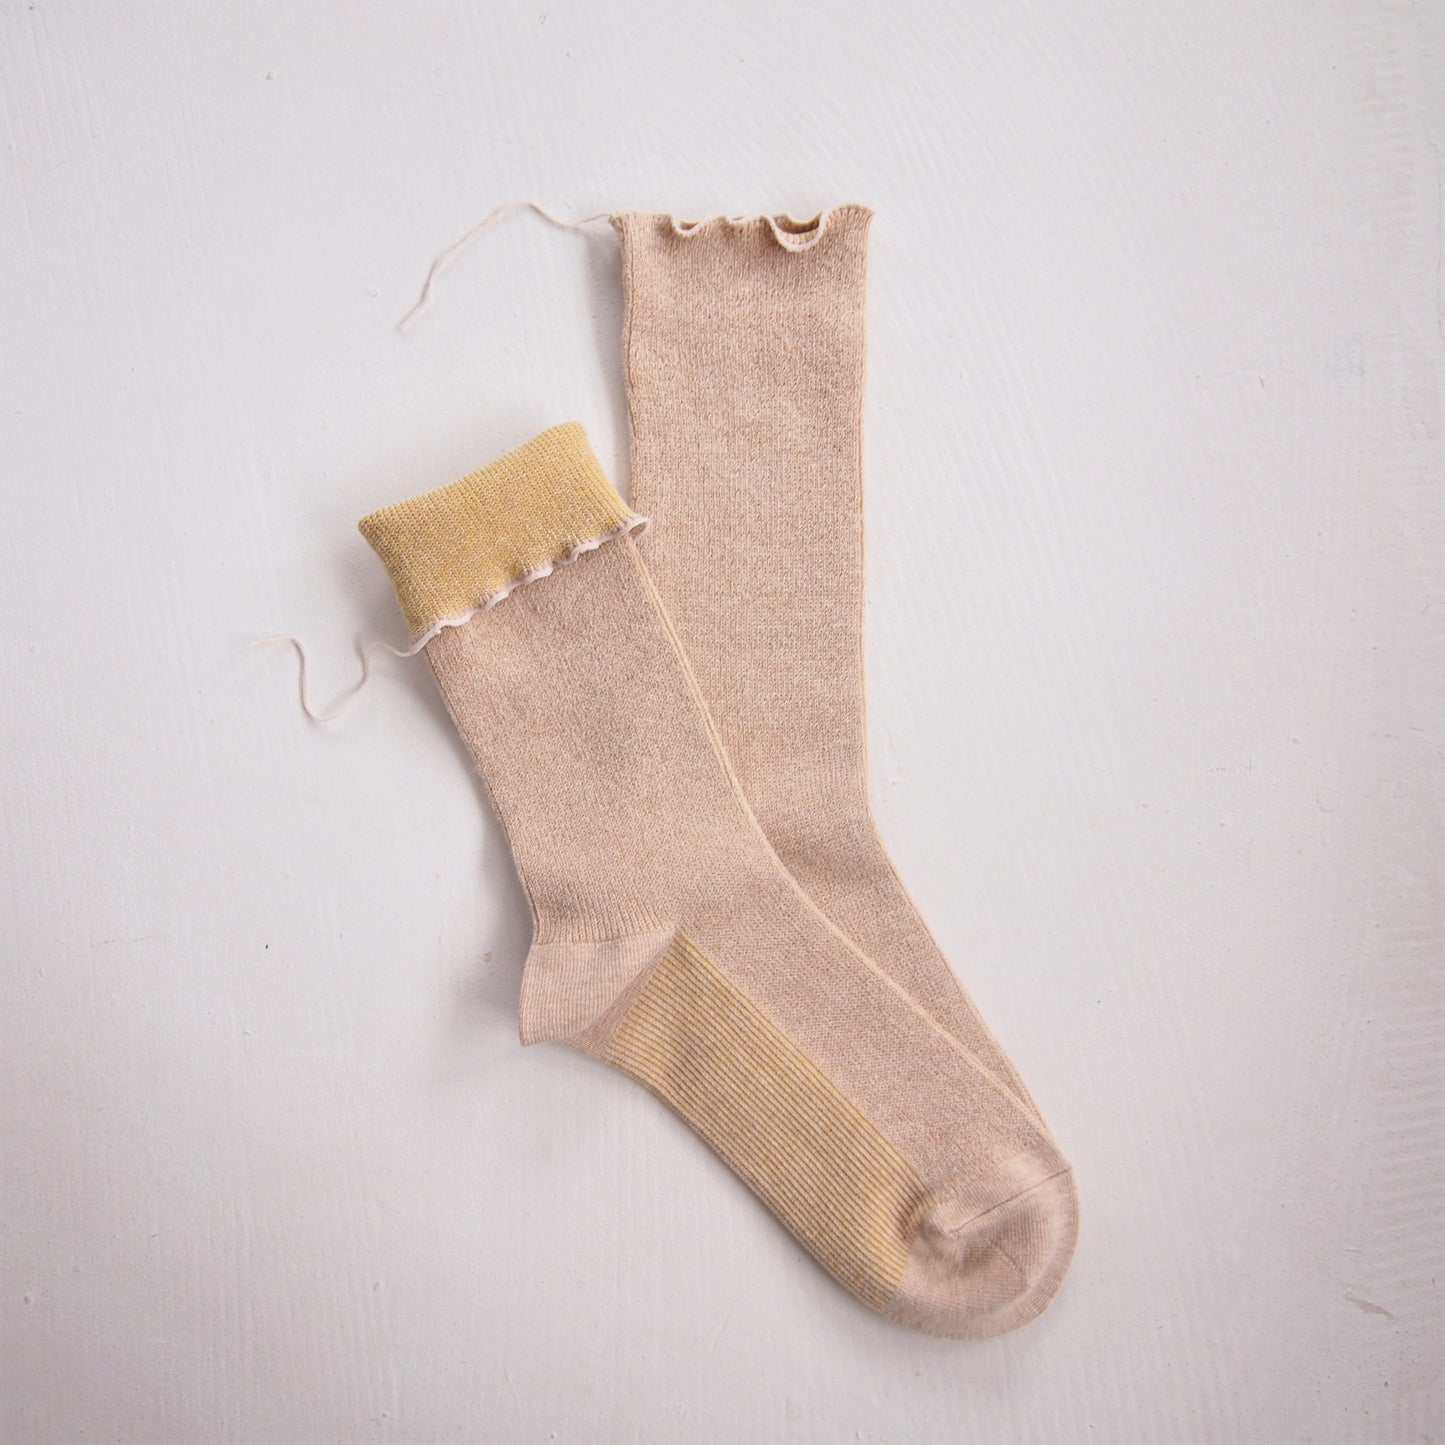 himukashi　organic cotton socks - Miritary no! coyote